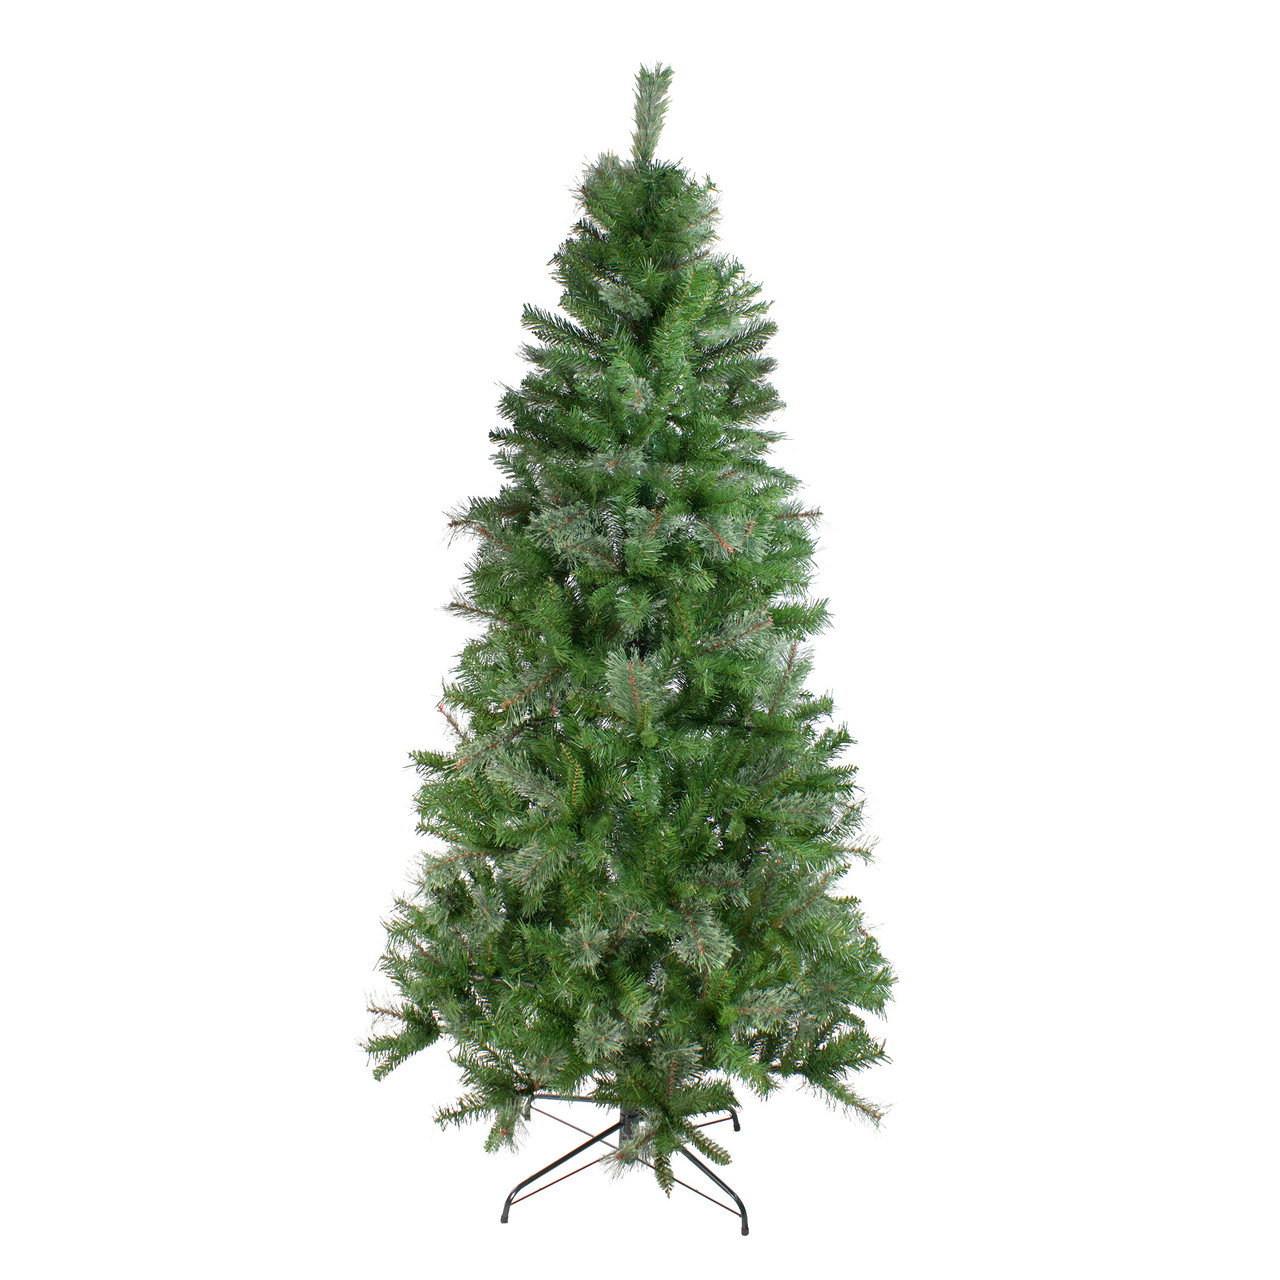 Kalksteen Draad mechanisme 6.5' Medium Mixed Cashmere Pine Artificial Christmas Tree - Unlit |  Christmas